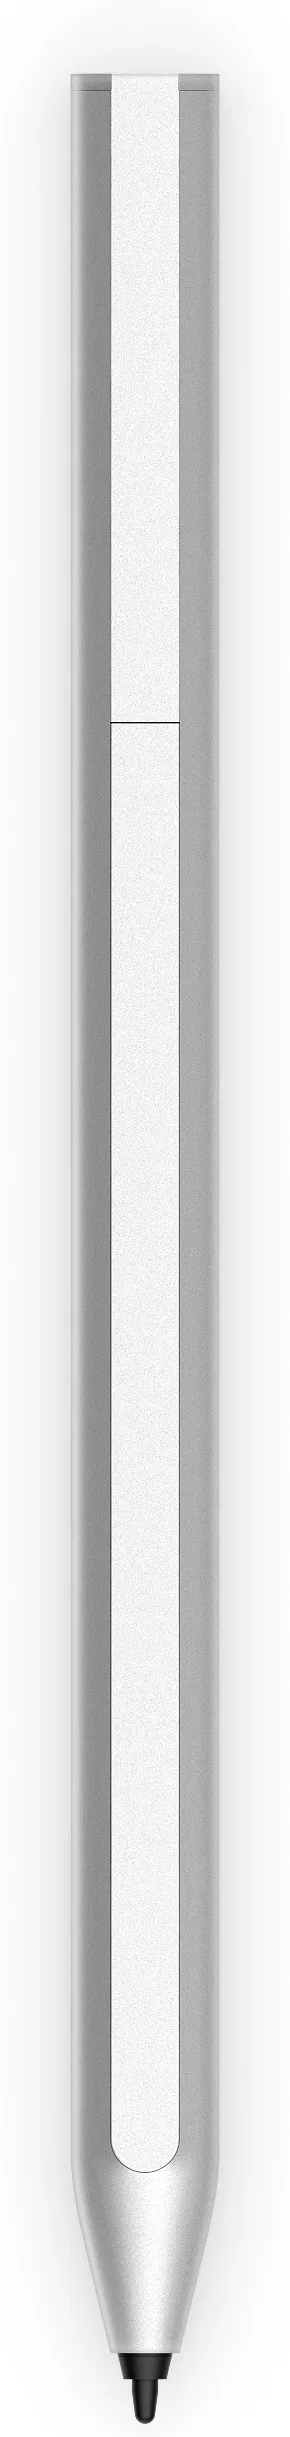 Revendeur officiel Dispositif pointage Stylet USI rechargeable HP